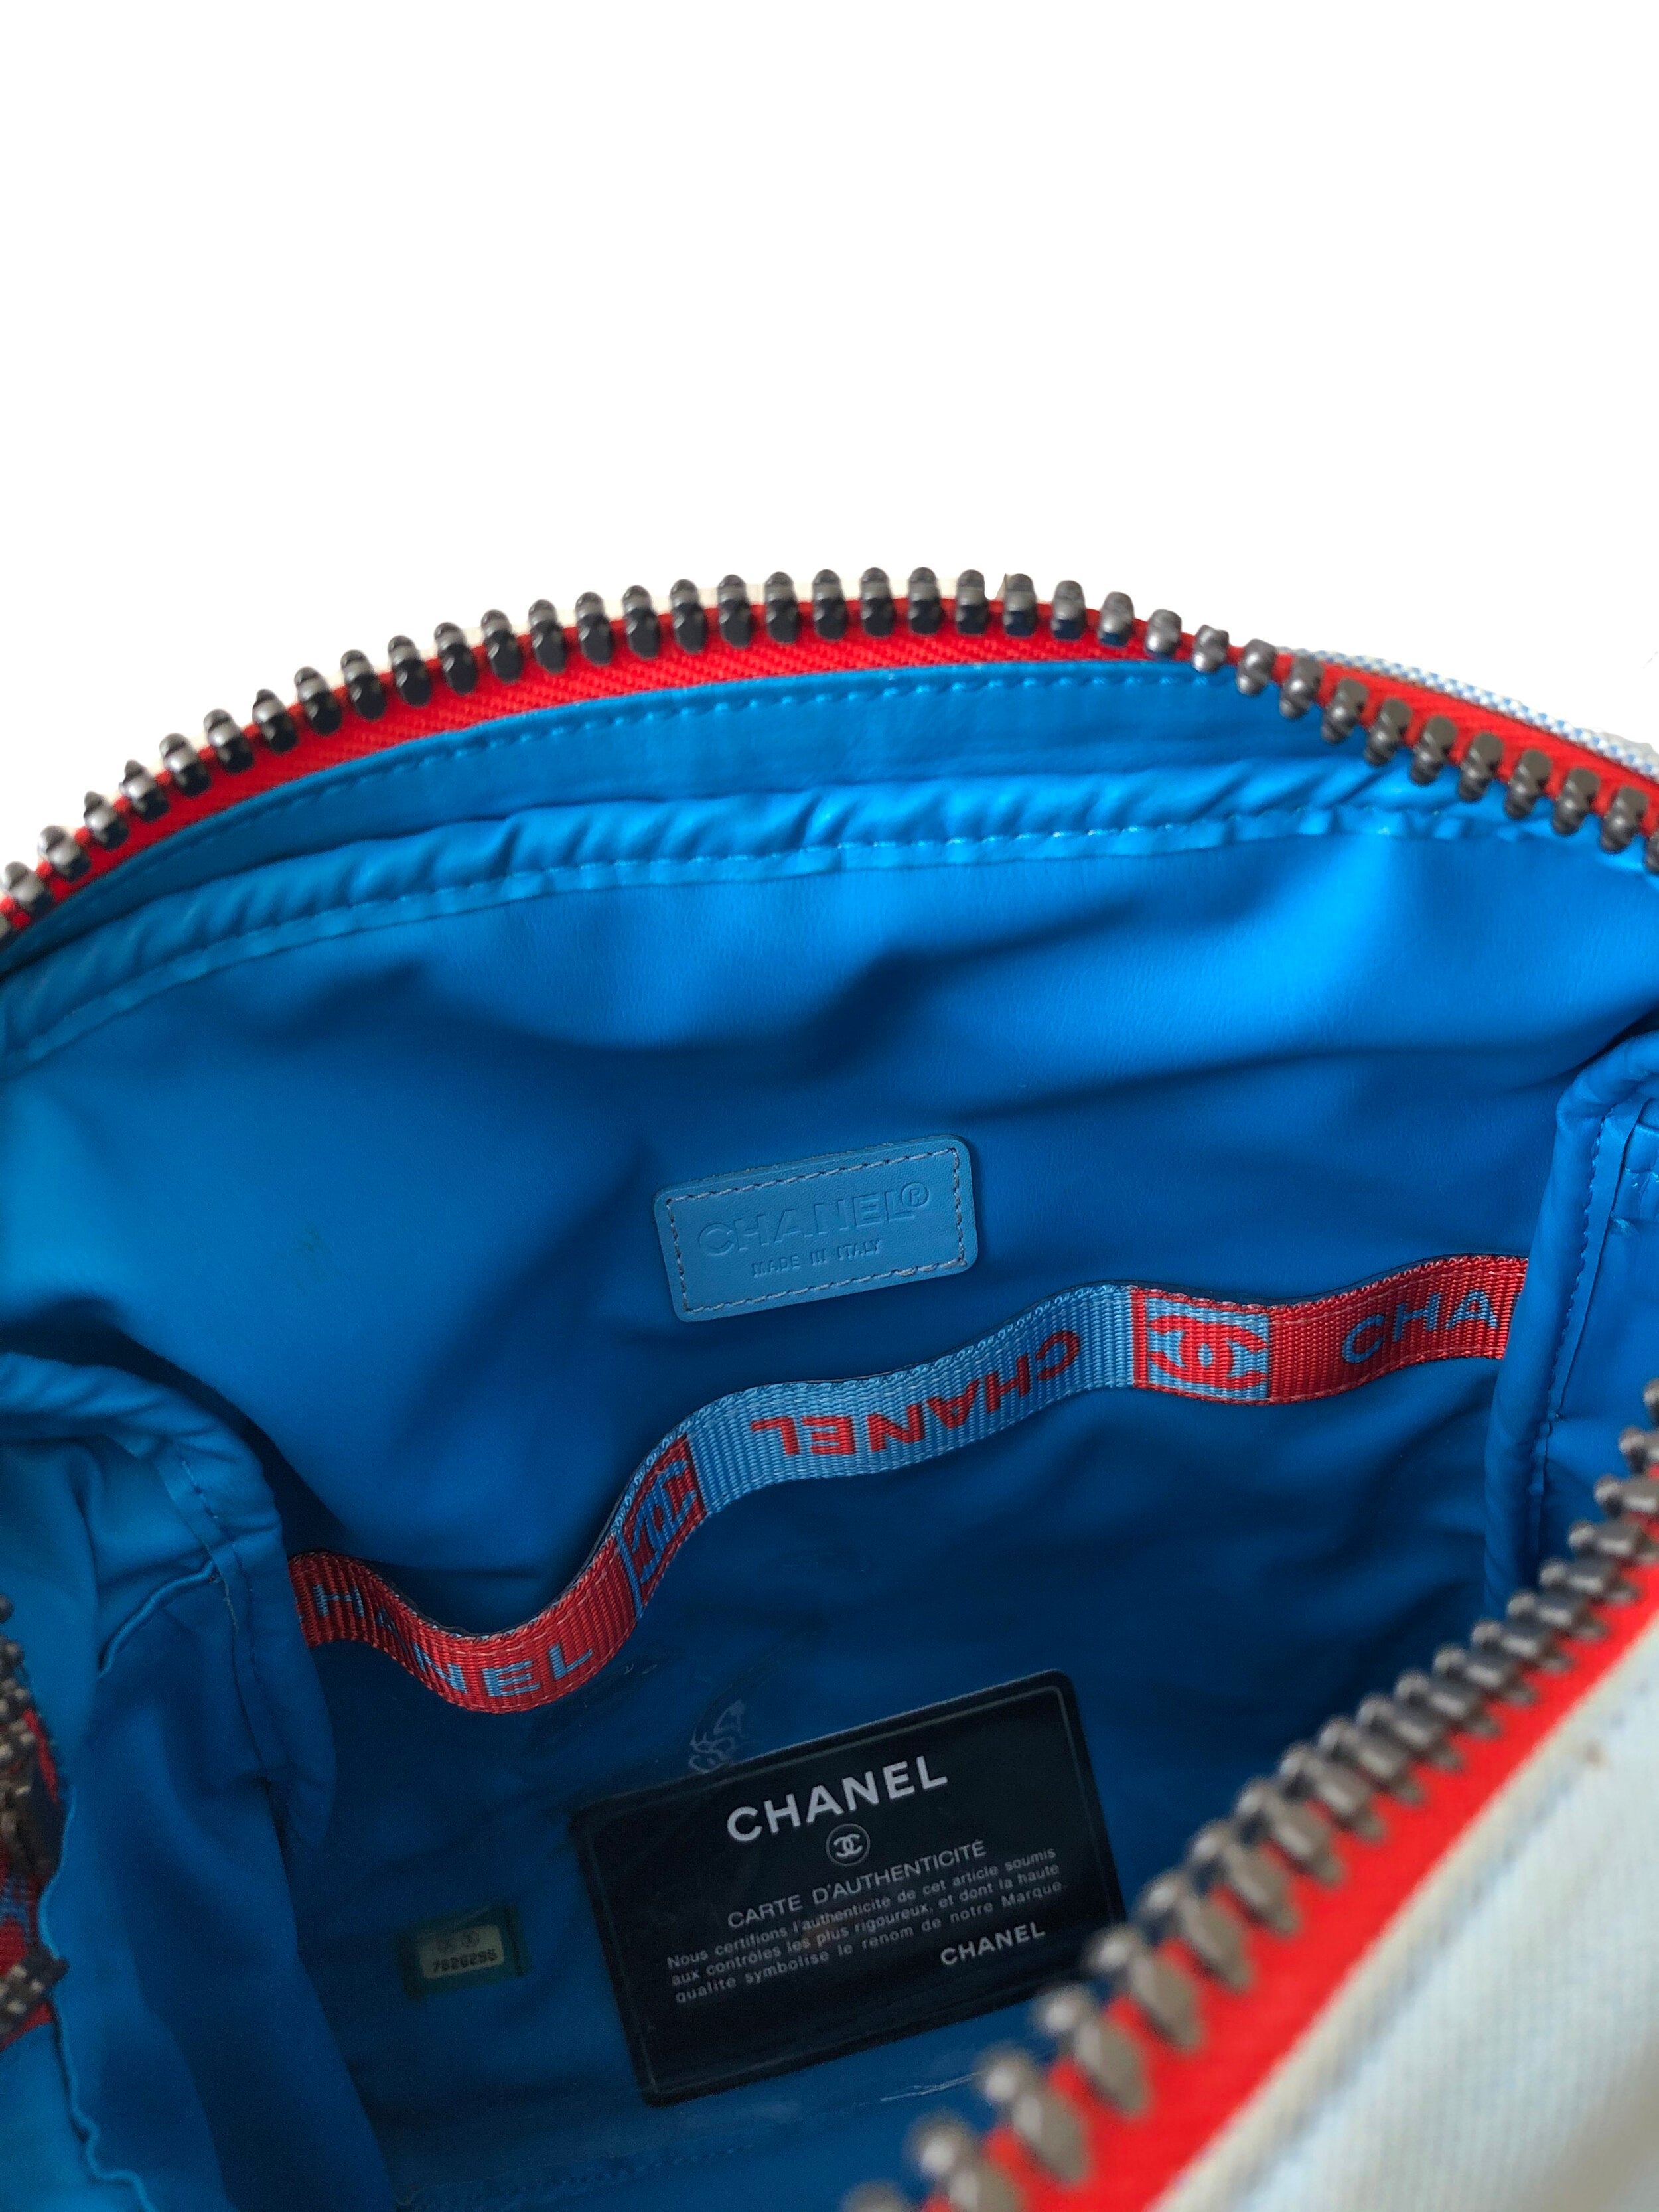 flamme Revision Interessant Chanel Sports Line Shoulder Bag · INTO